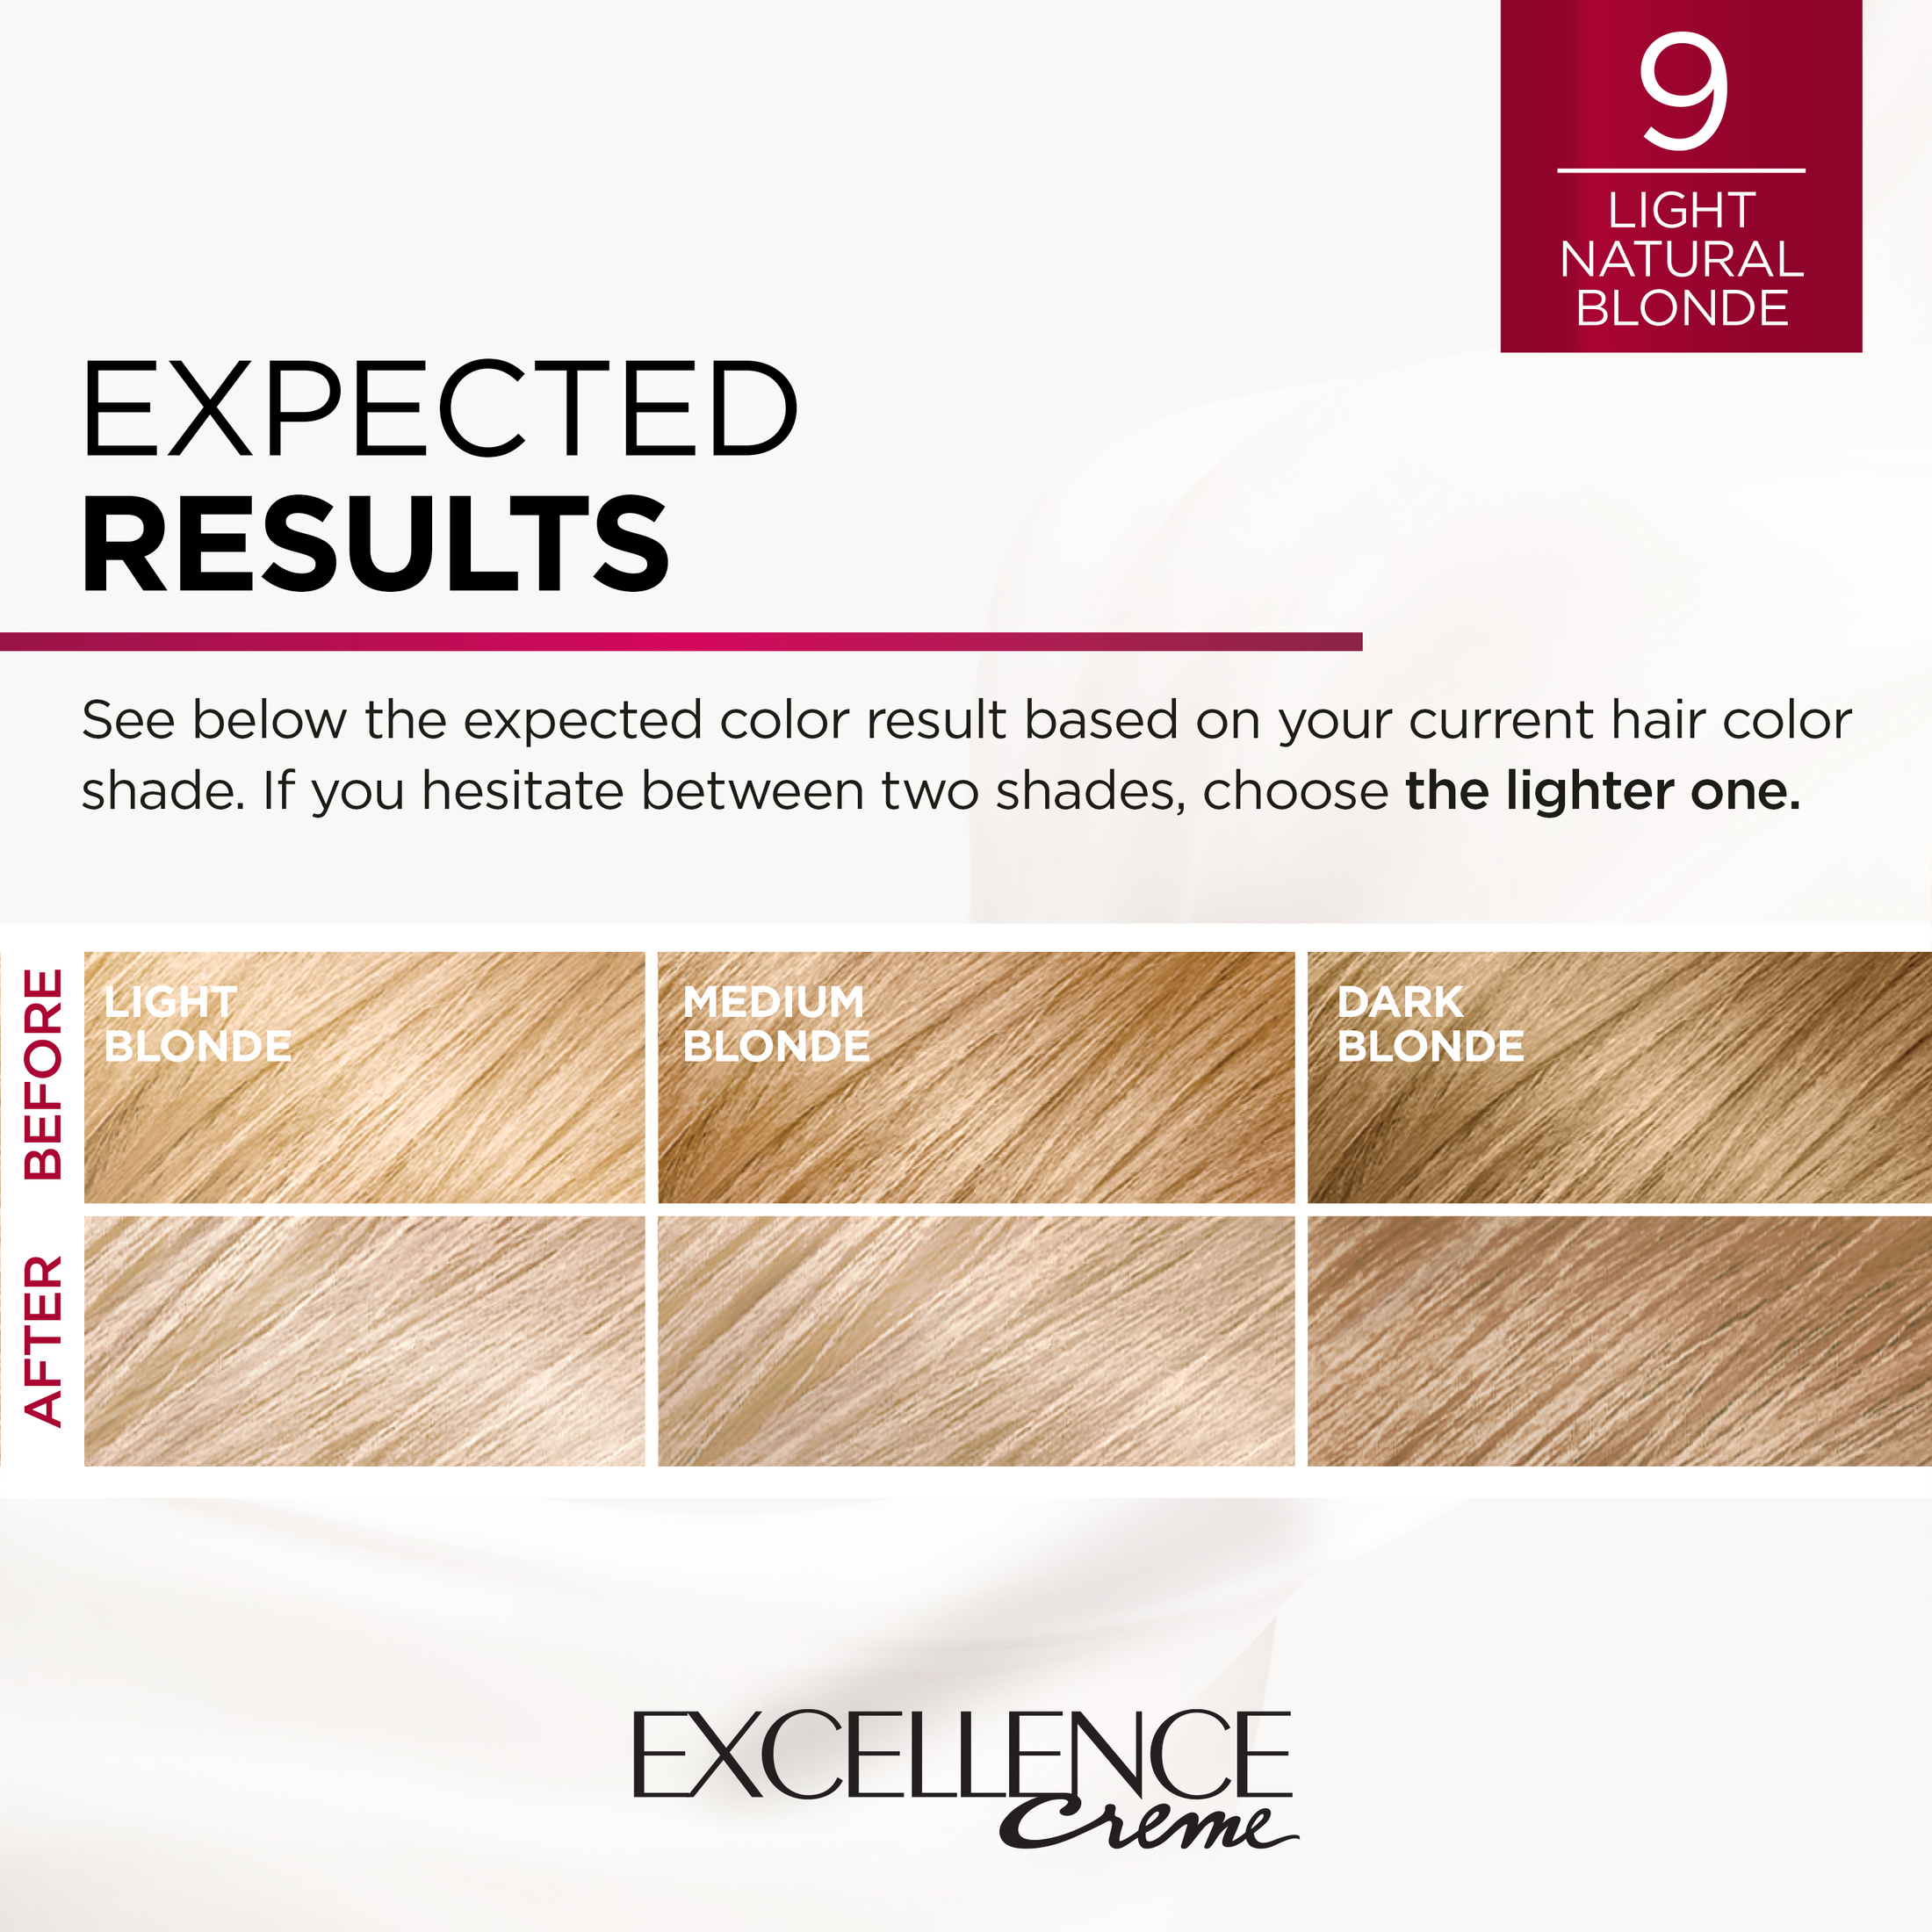 L'Oreal Paris Excellence Creme Permanent Hair Color, 9 Light Natural Blonde - image 5 of 8